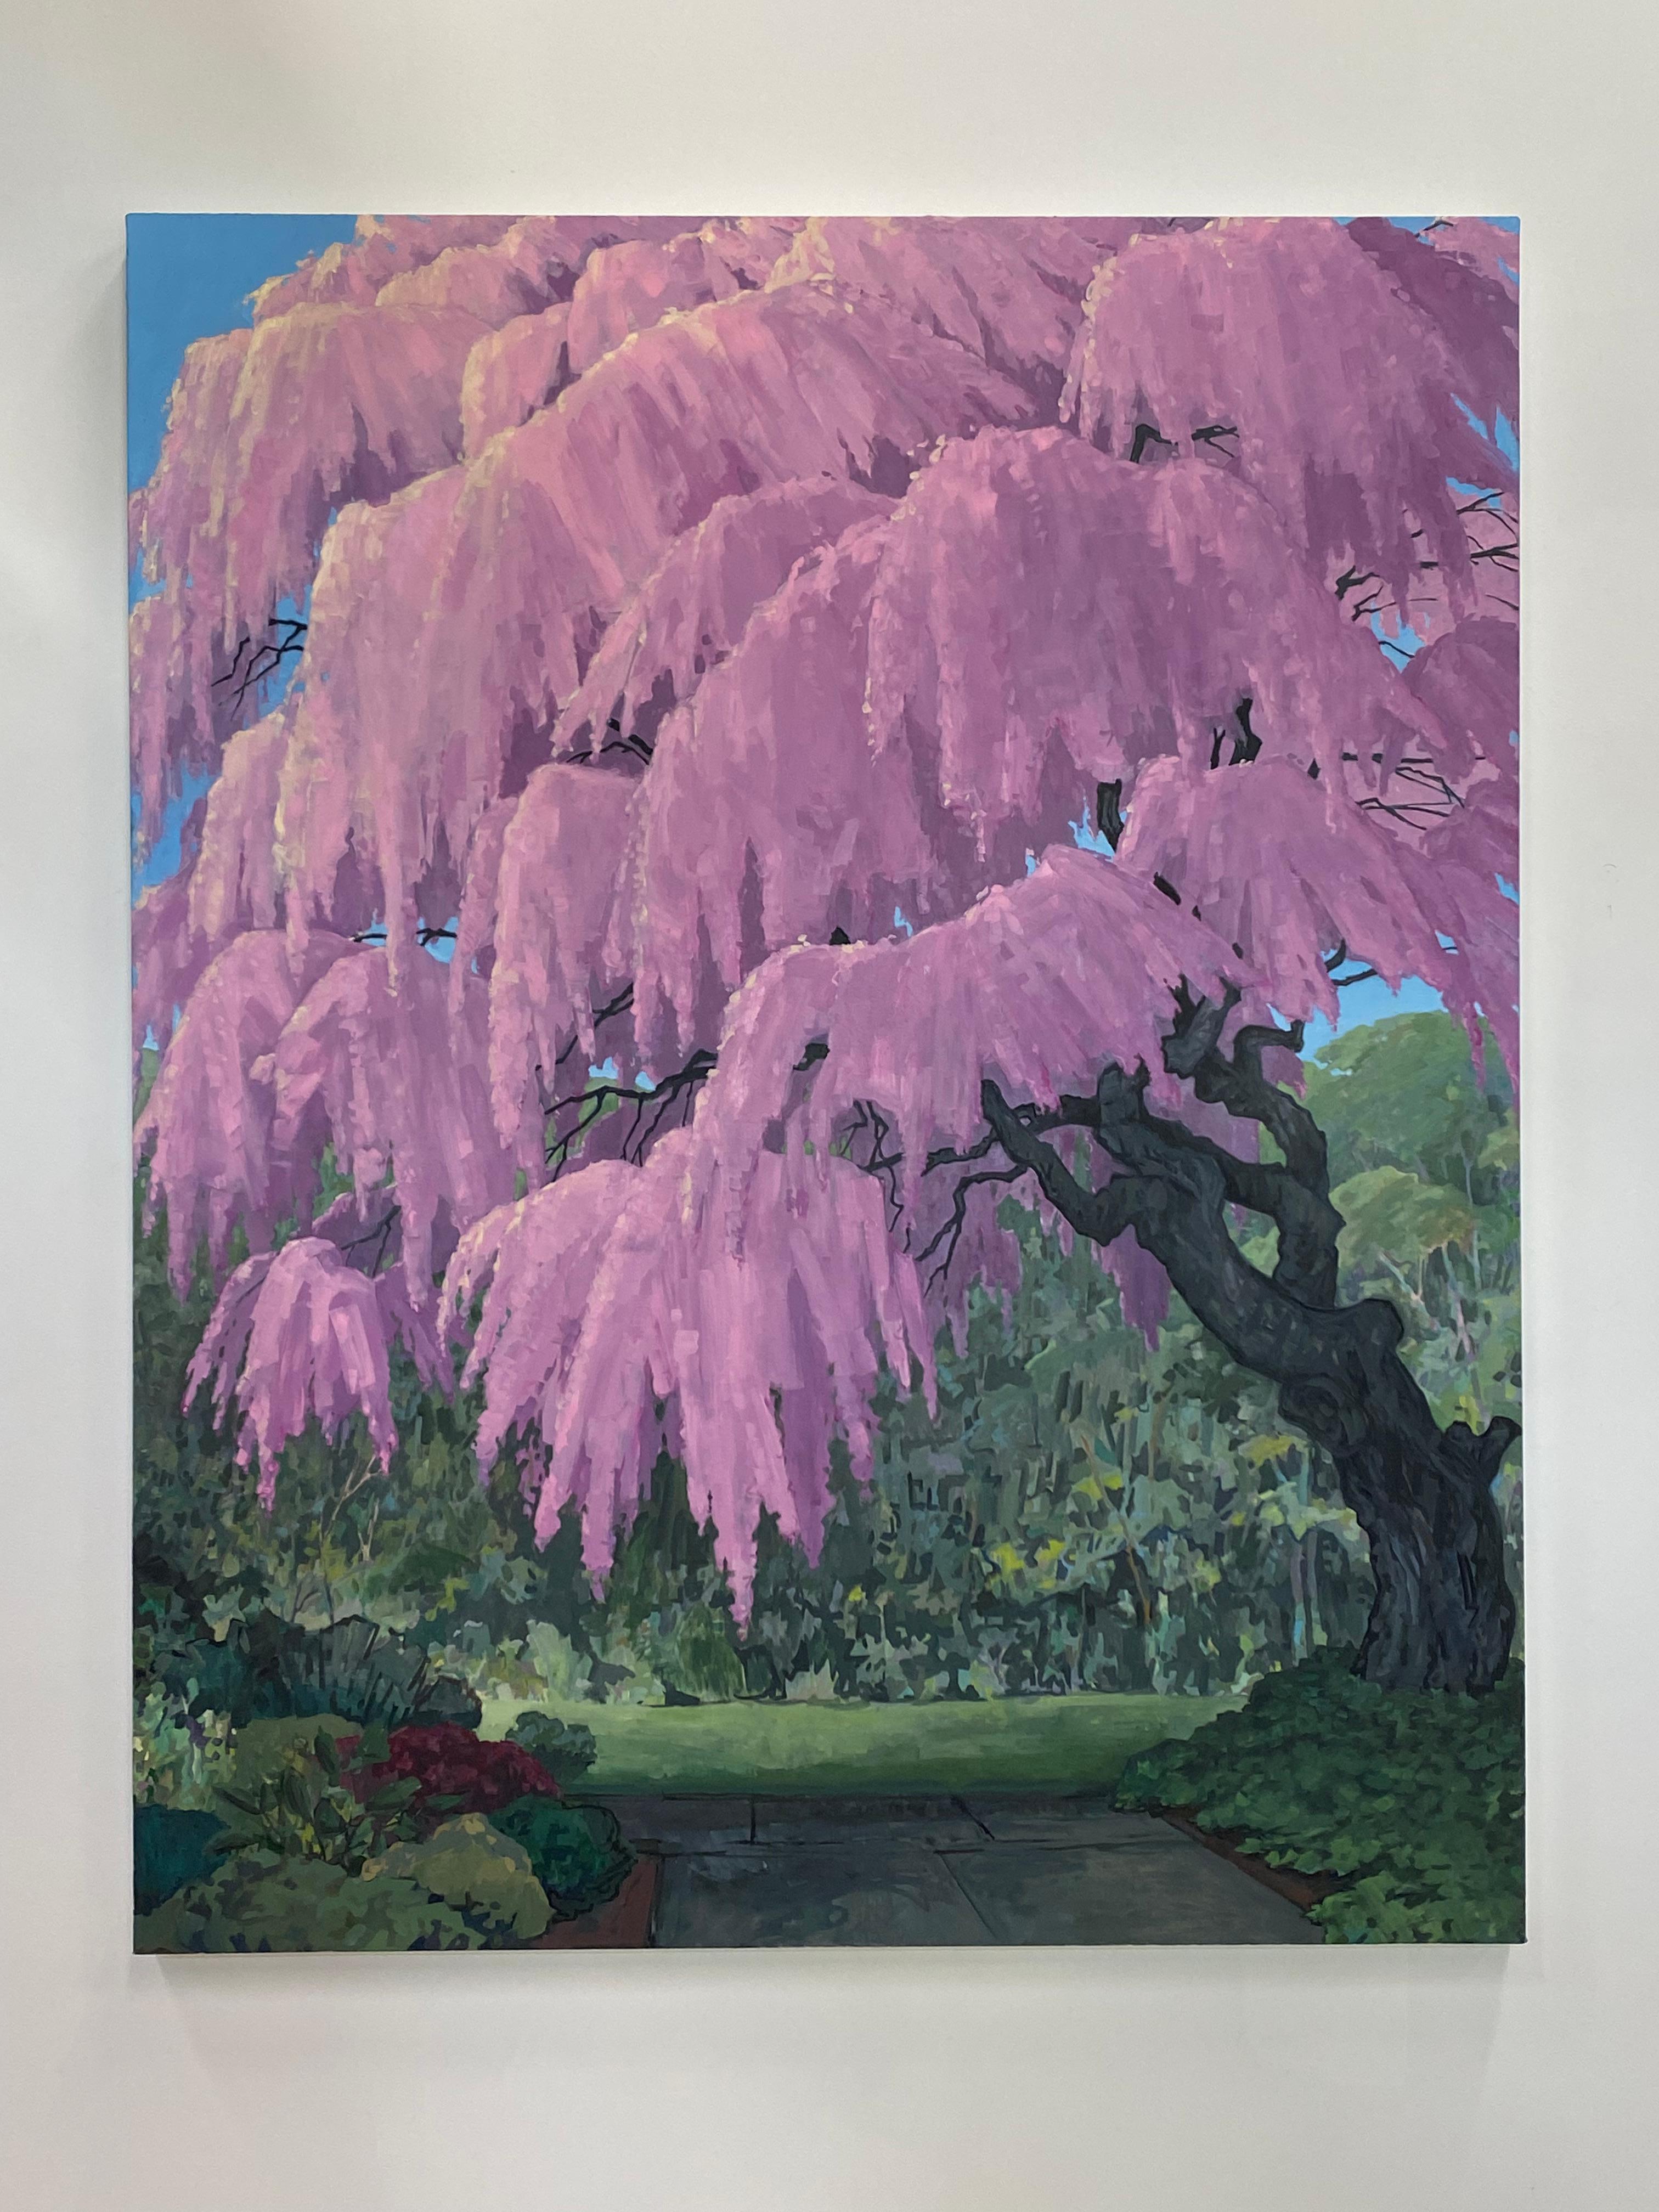 Weeping Cherry, Cherry Blossom Tree, Pink, Blue Sky, Green Park Landscape - Painting by KK Kozik